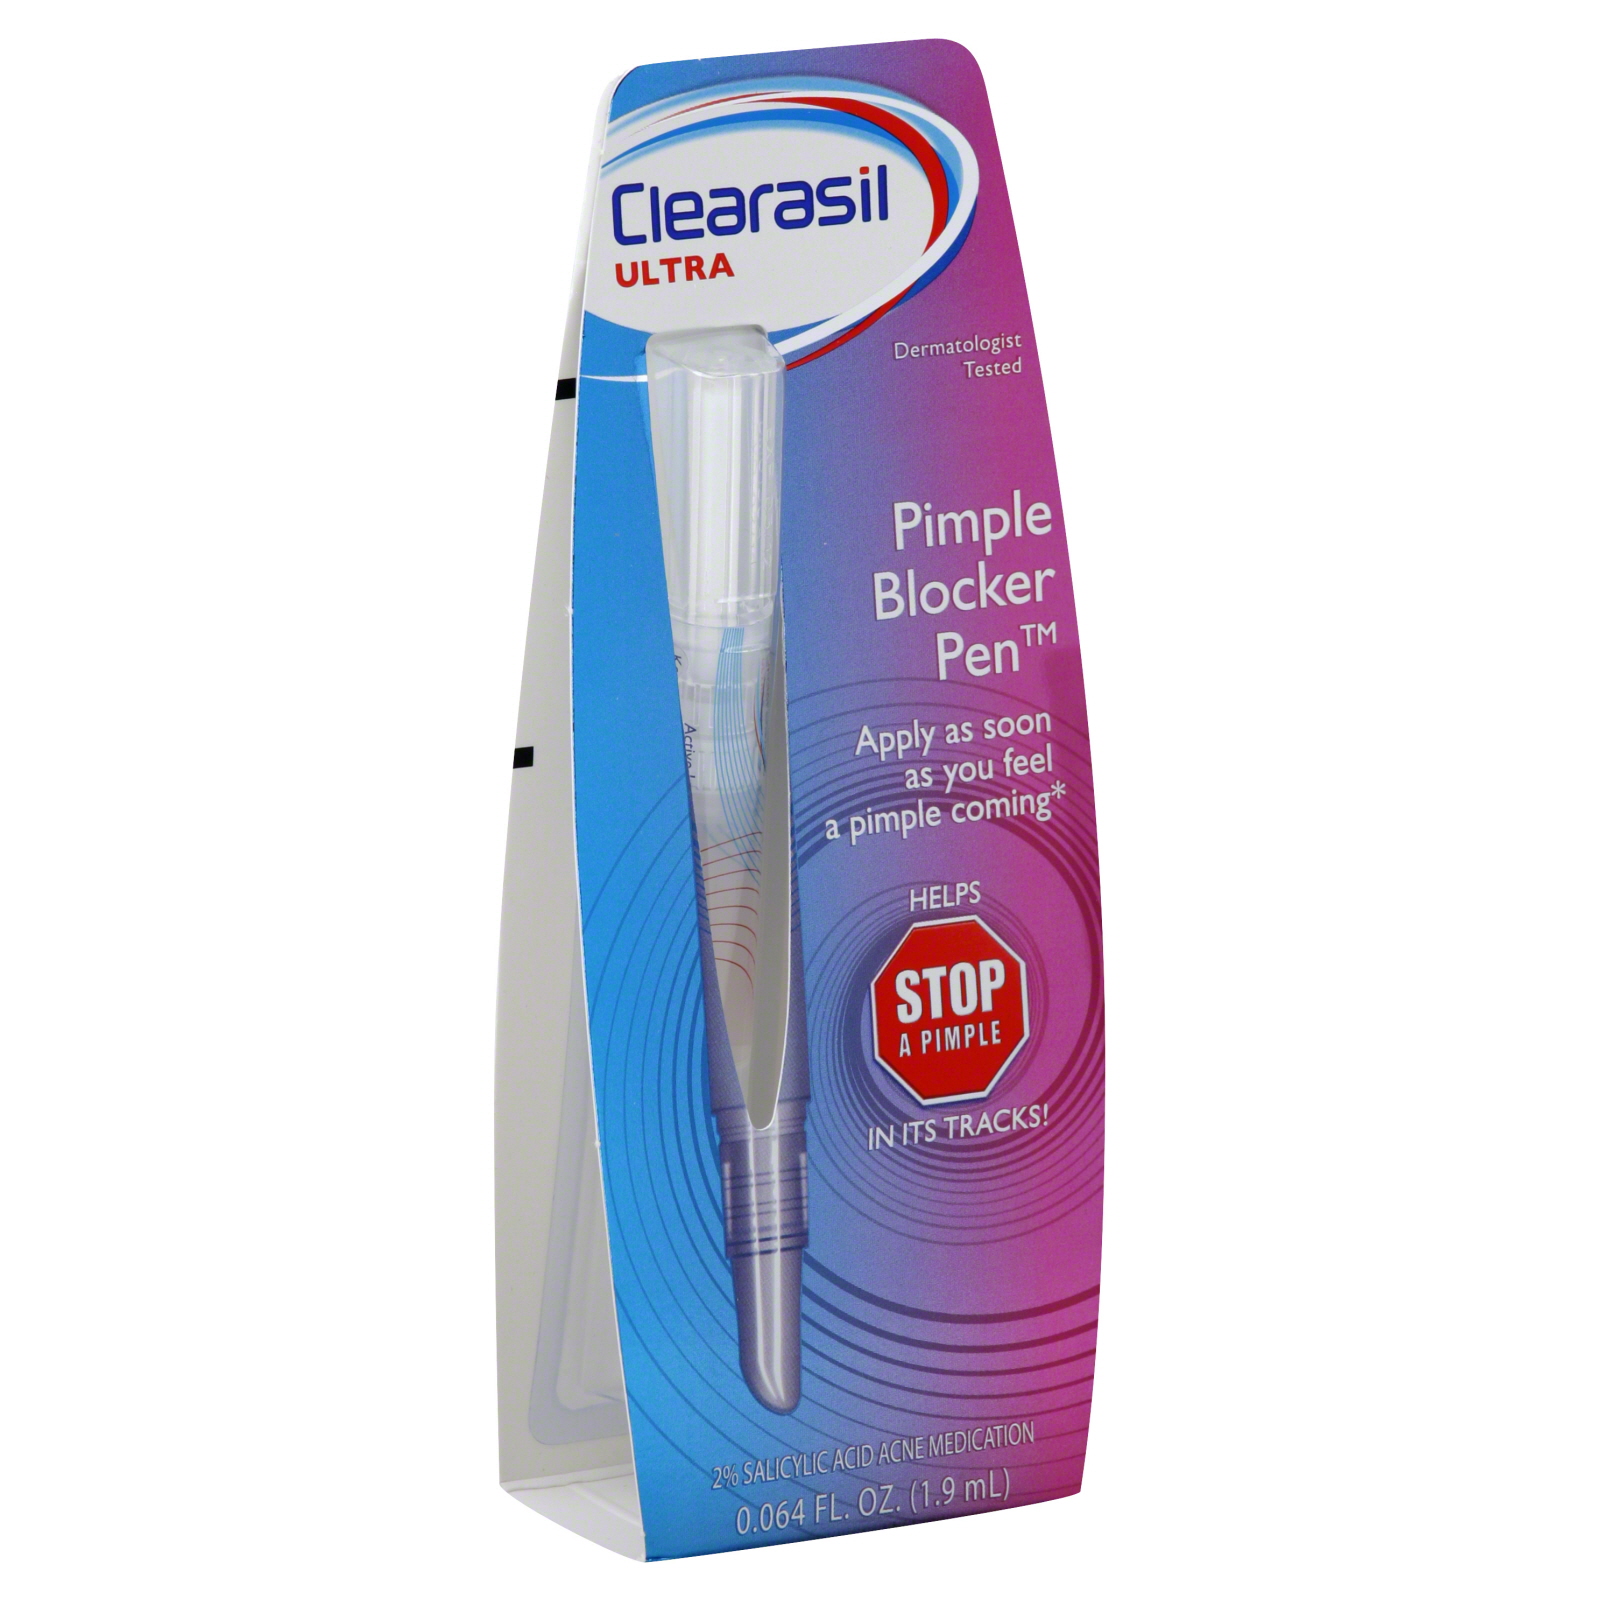 Clearisil Clearasil Ultra Pimple Blocker Pen, 0.064 fl oz (1.9 ml)